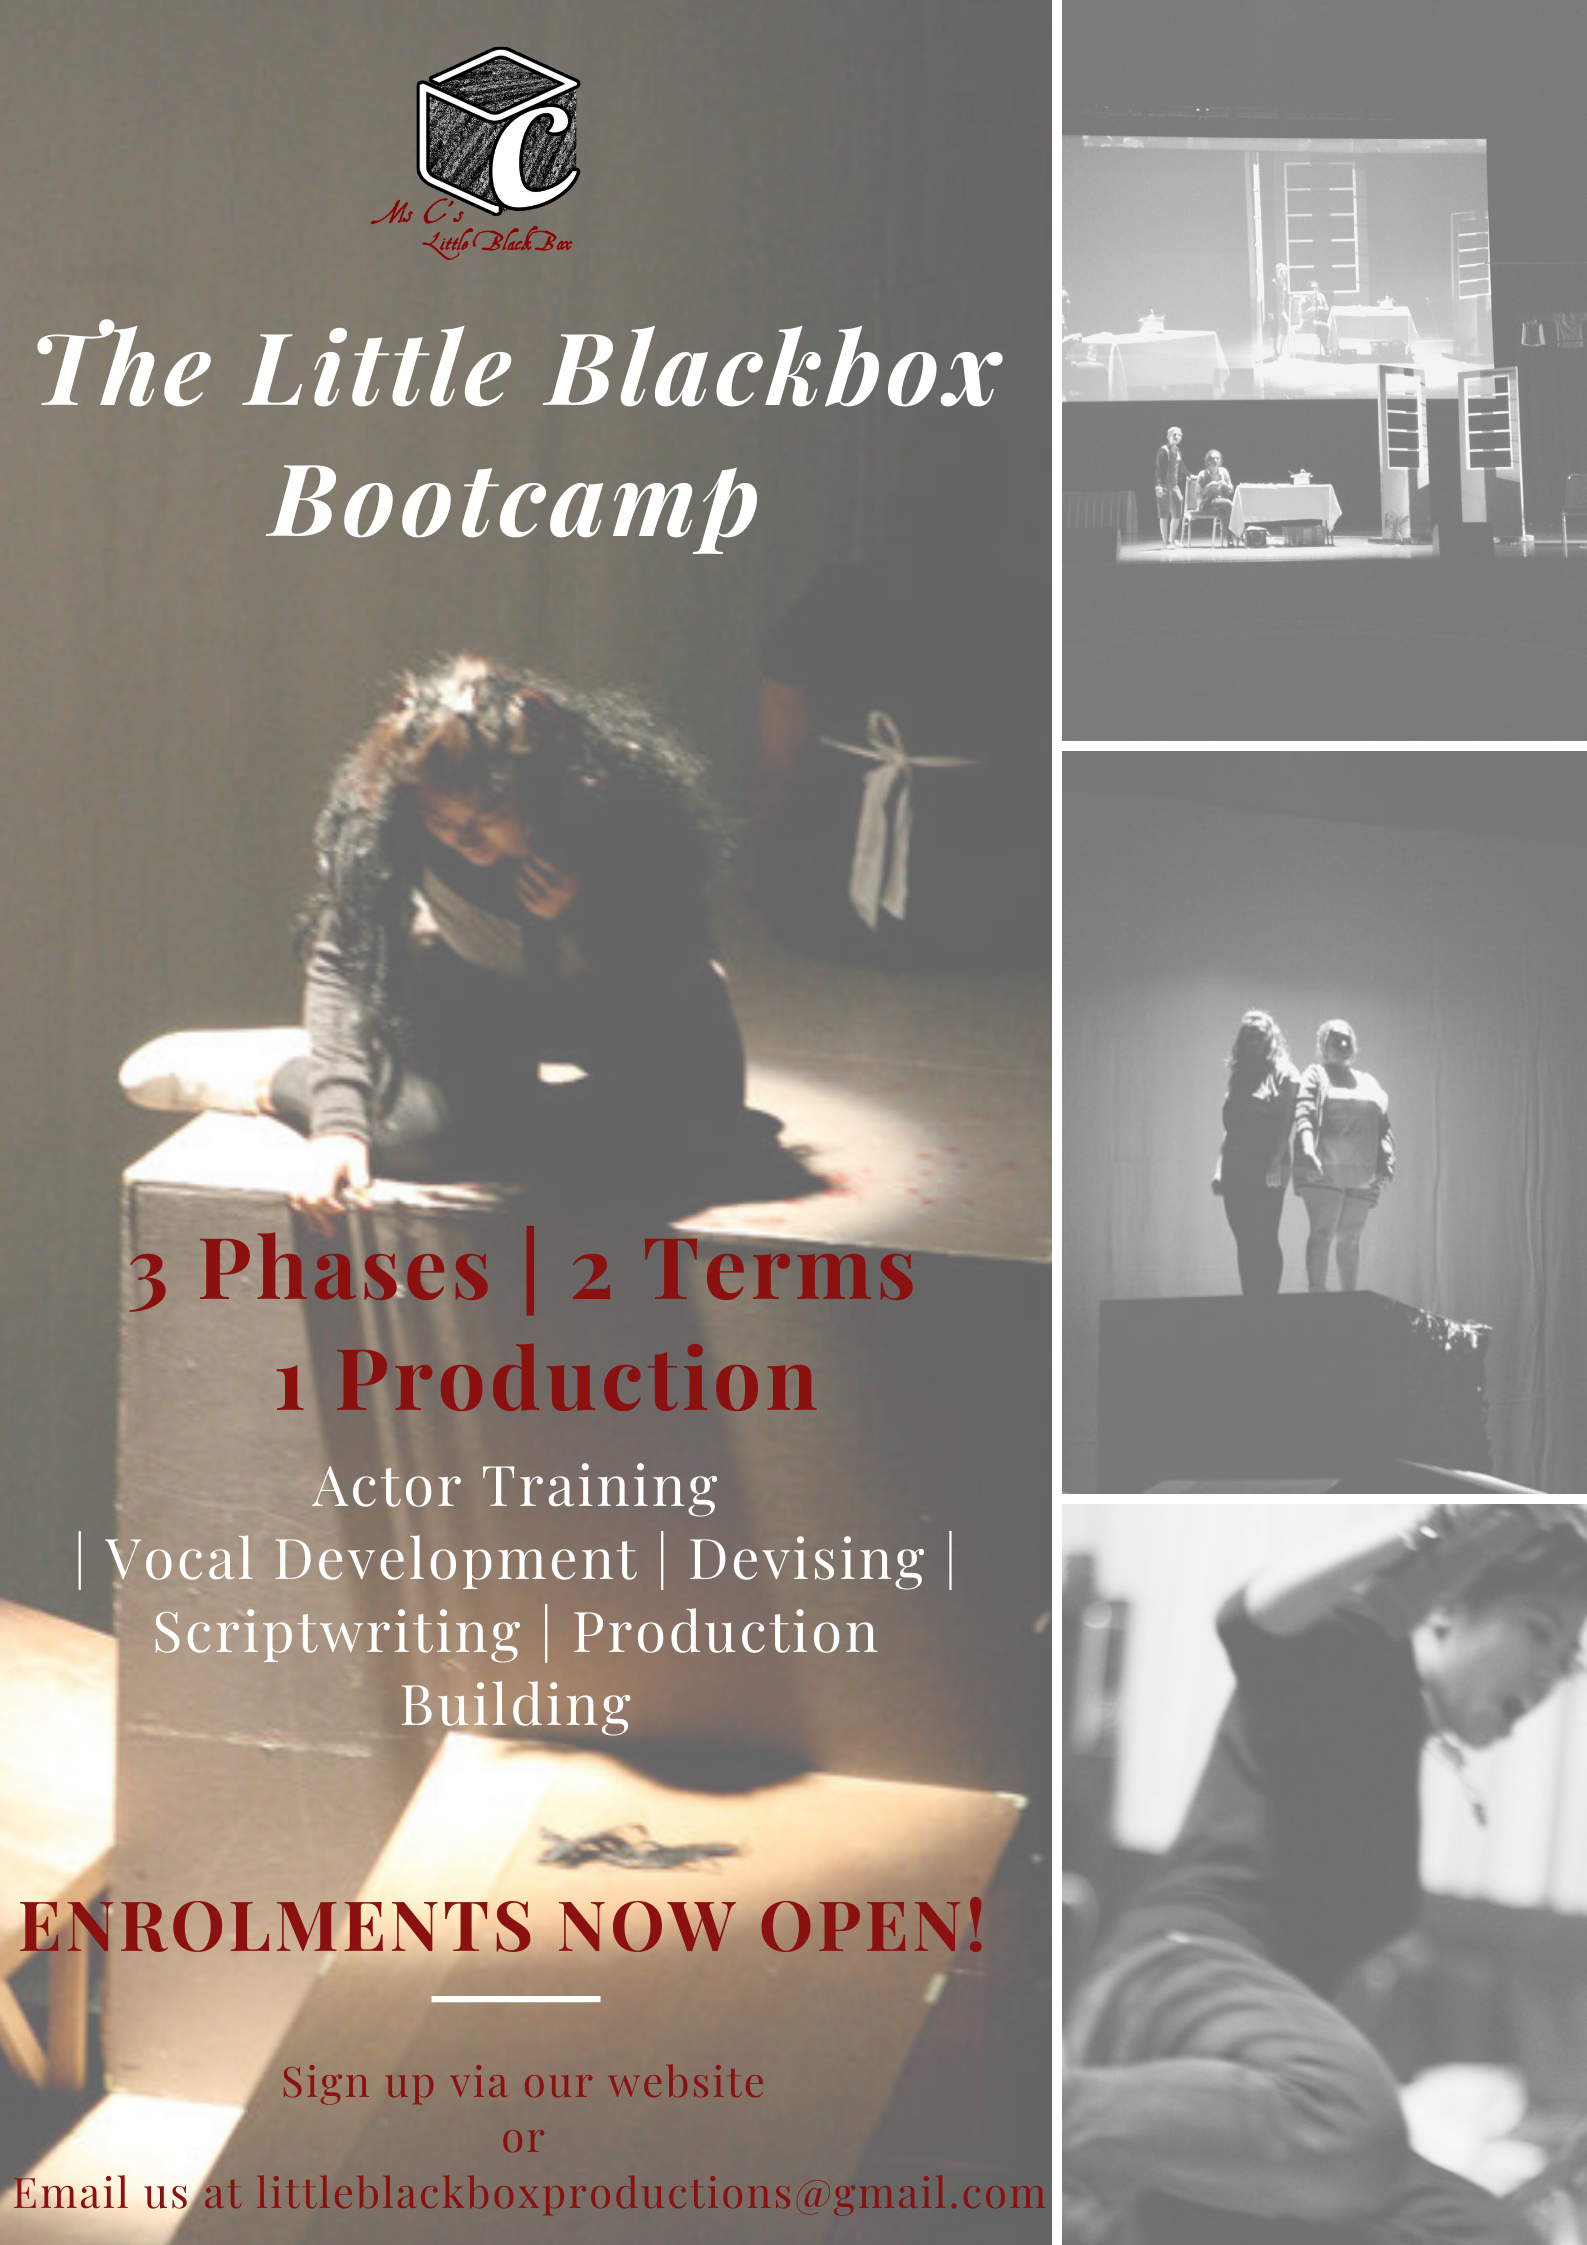 The Little Blackbox Bootcamp — Ms C's Little Blackbox Productions